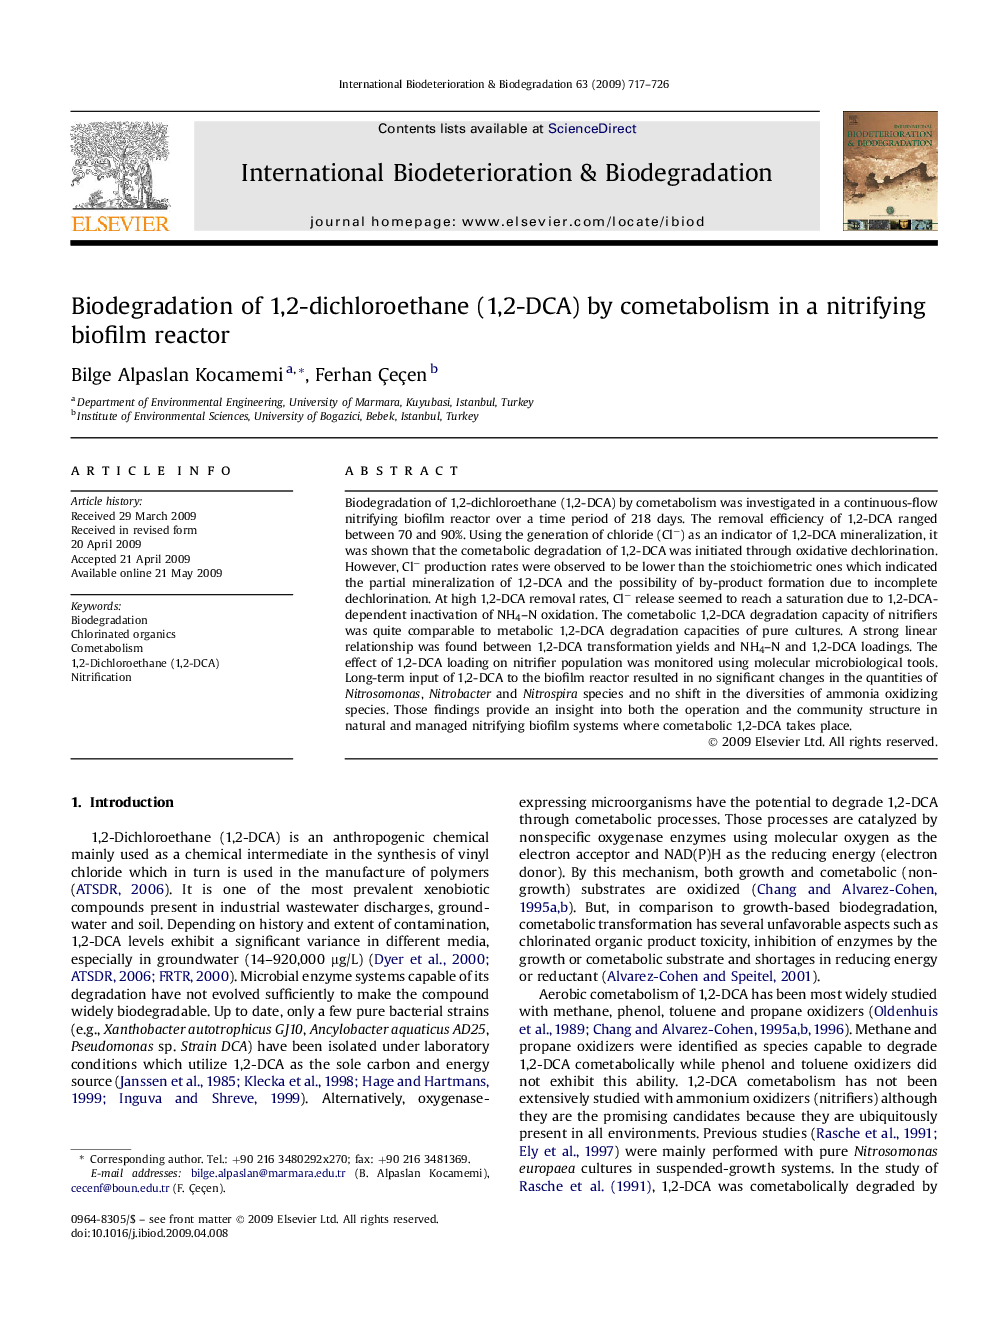 Biodegradation of 1,2-dichloroethane (1,2-DCA) by cometabolism in a nitrifying biofilm reactor